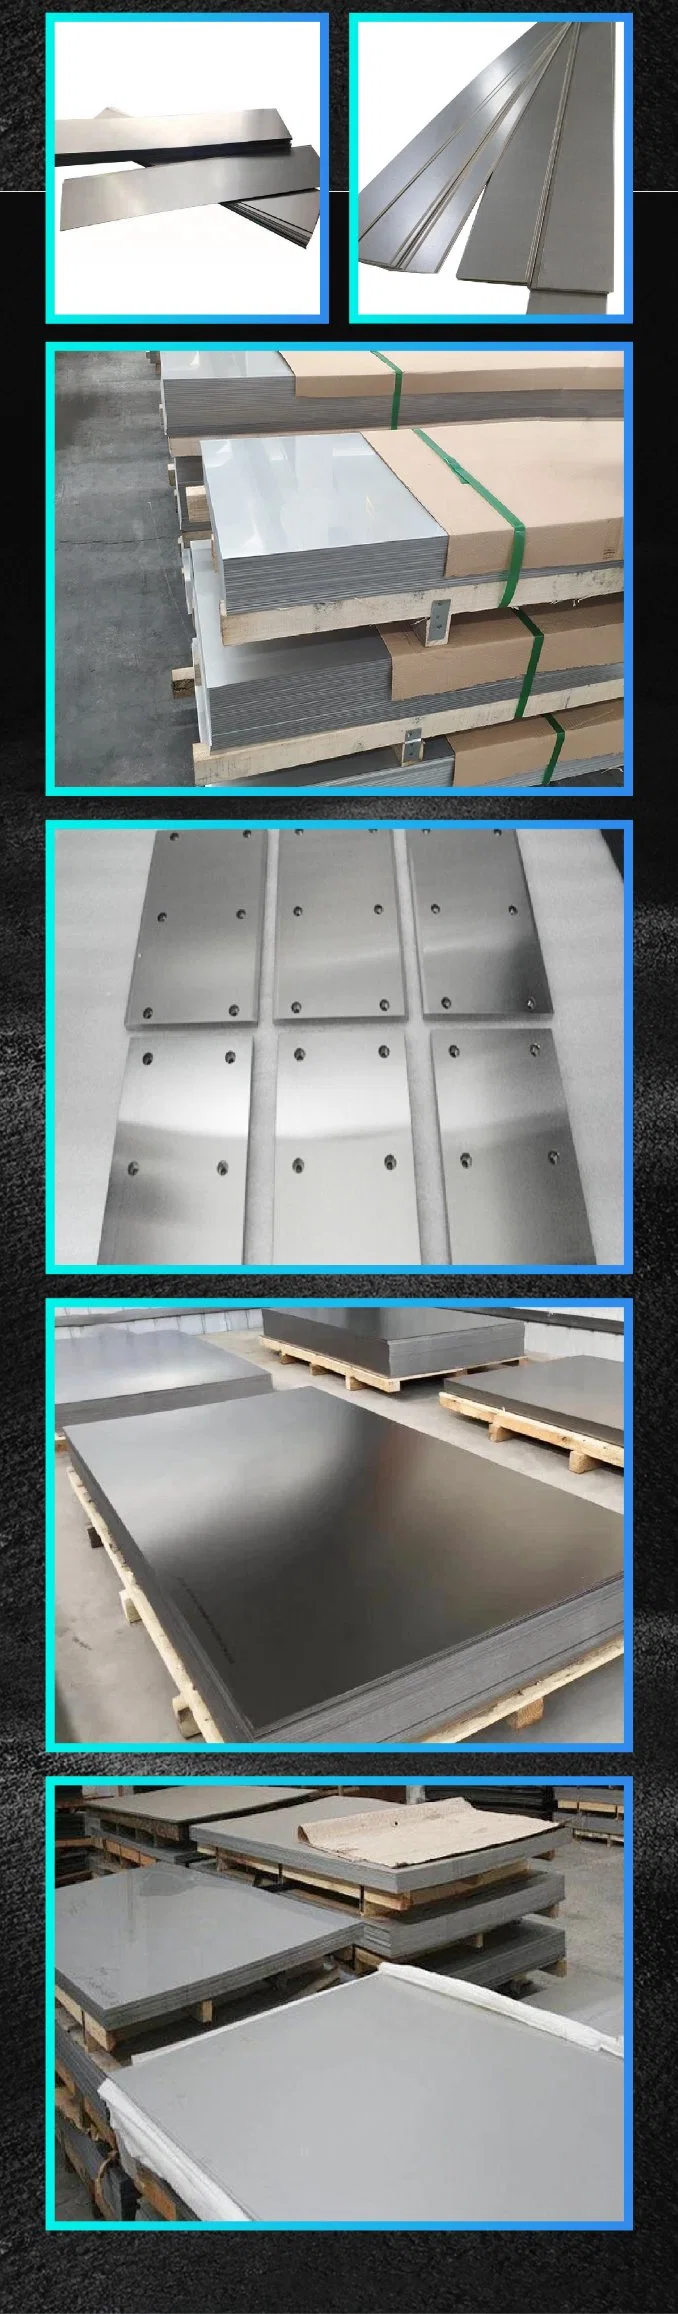 Ldx 2101 Lean Duplex Stainless Steel Plate, Bar Price